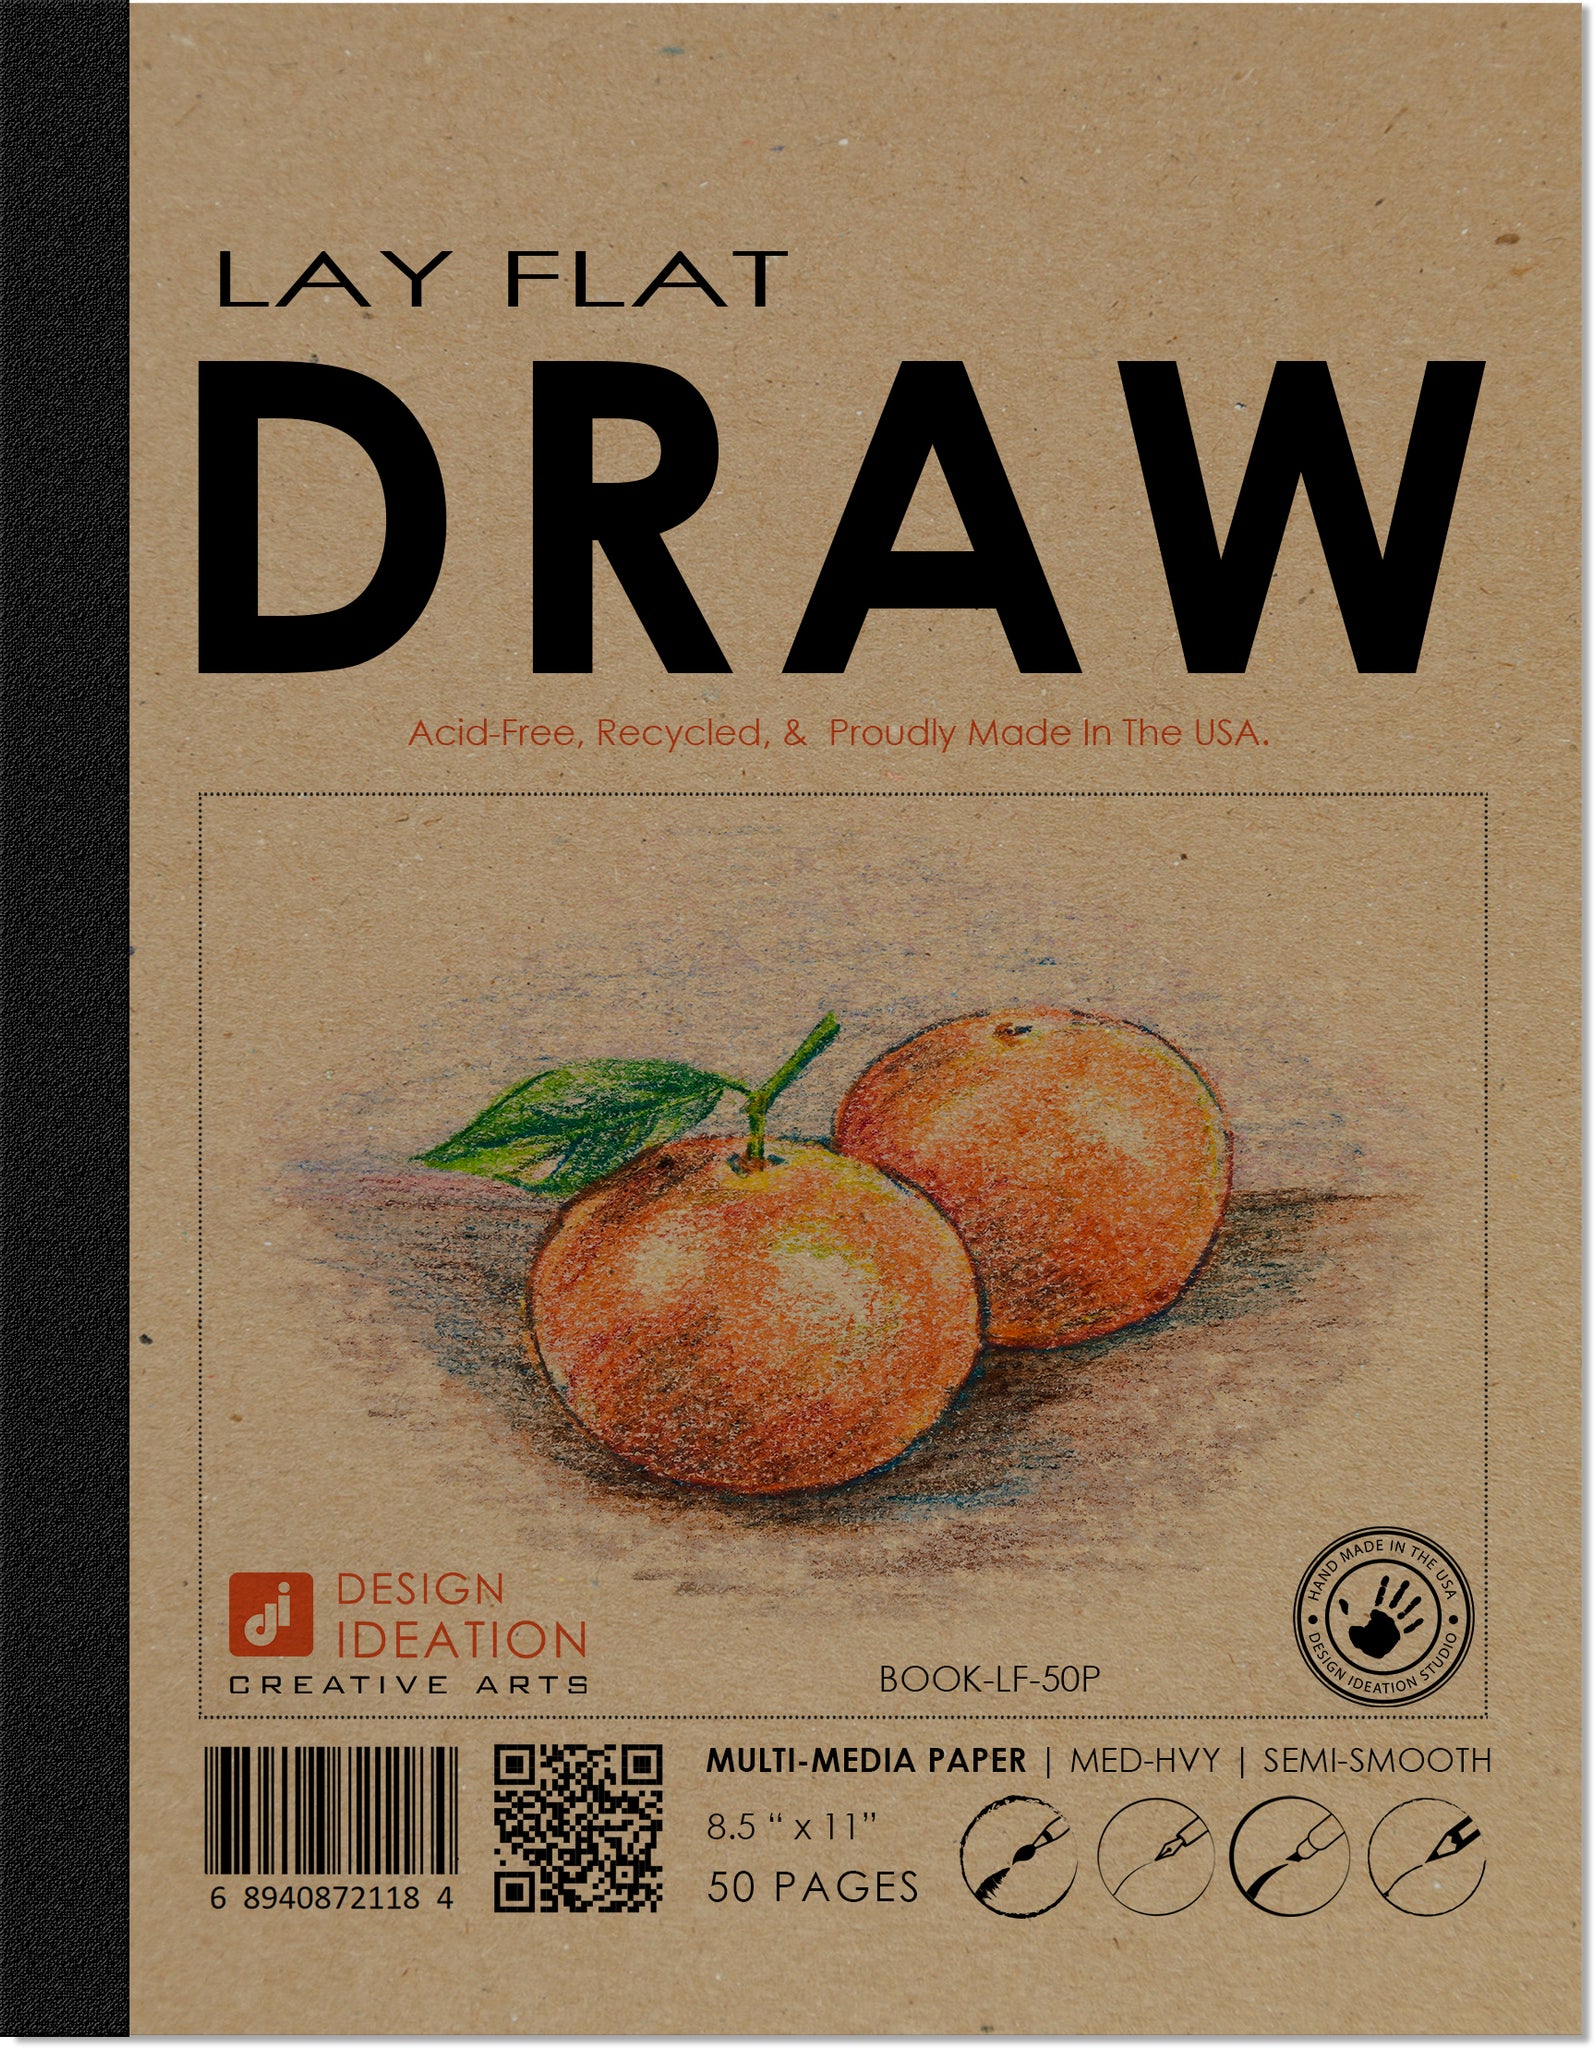 Khadi Journal with Cotton Watercolor Paper, Lay flat Sketchbook Art Jo –